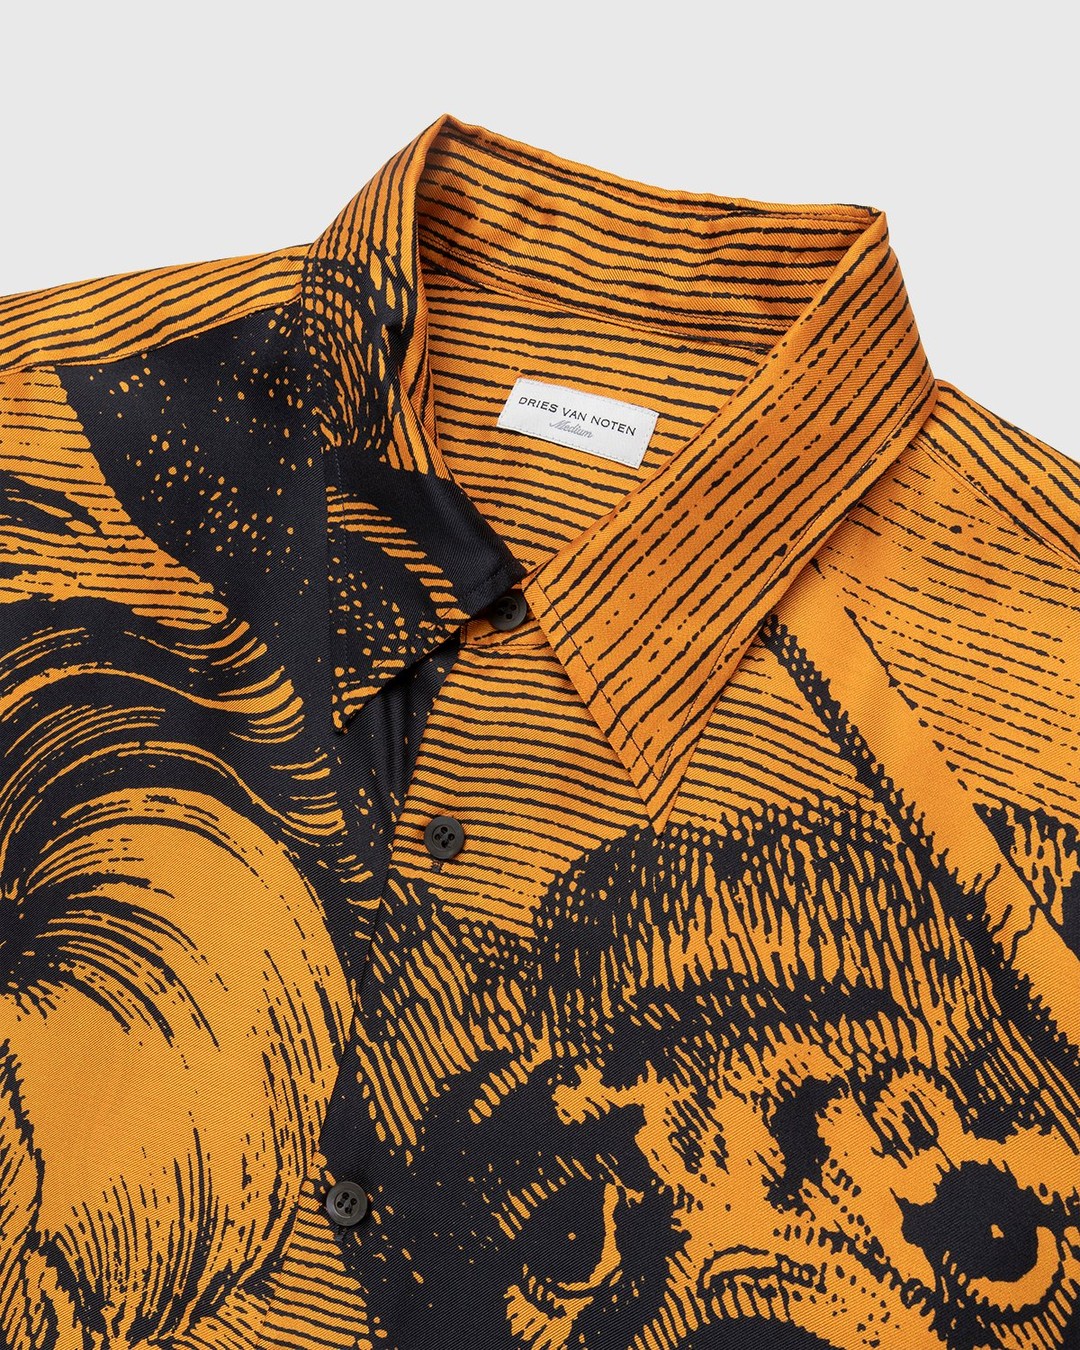 Dries van Noten – Cassidye Shirt Orange - Shirts - Orange - Image 5